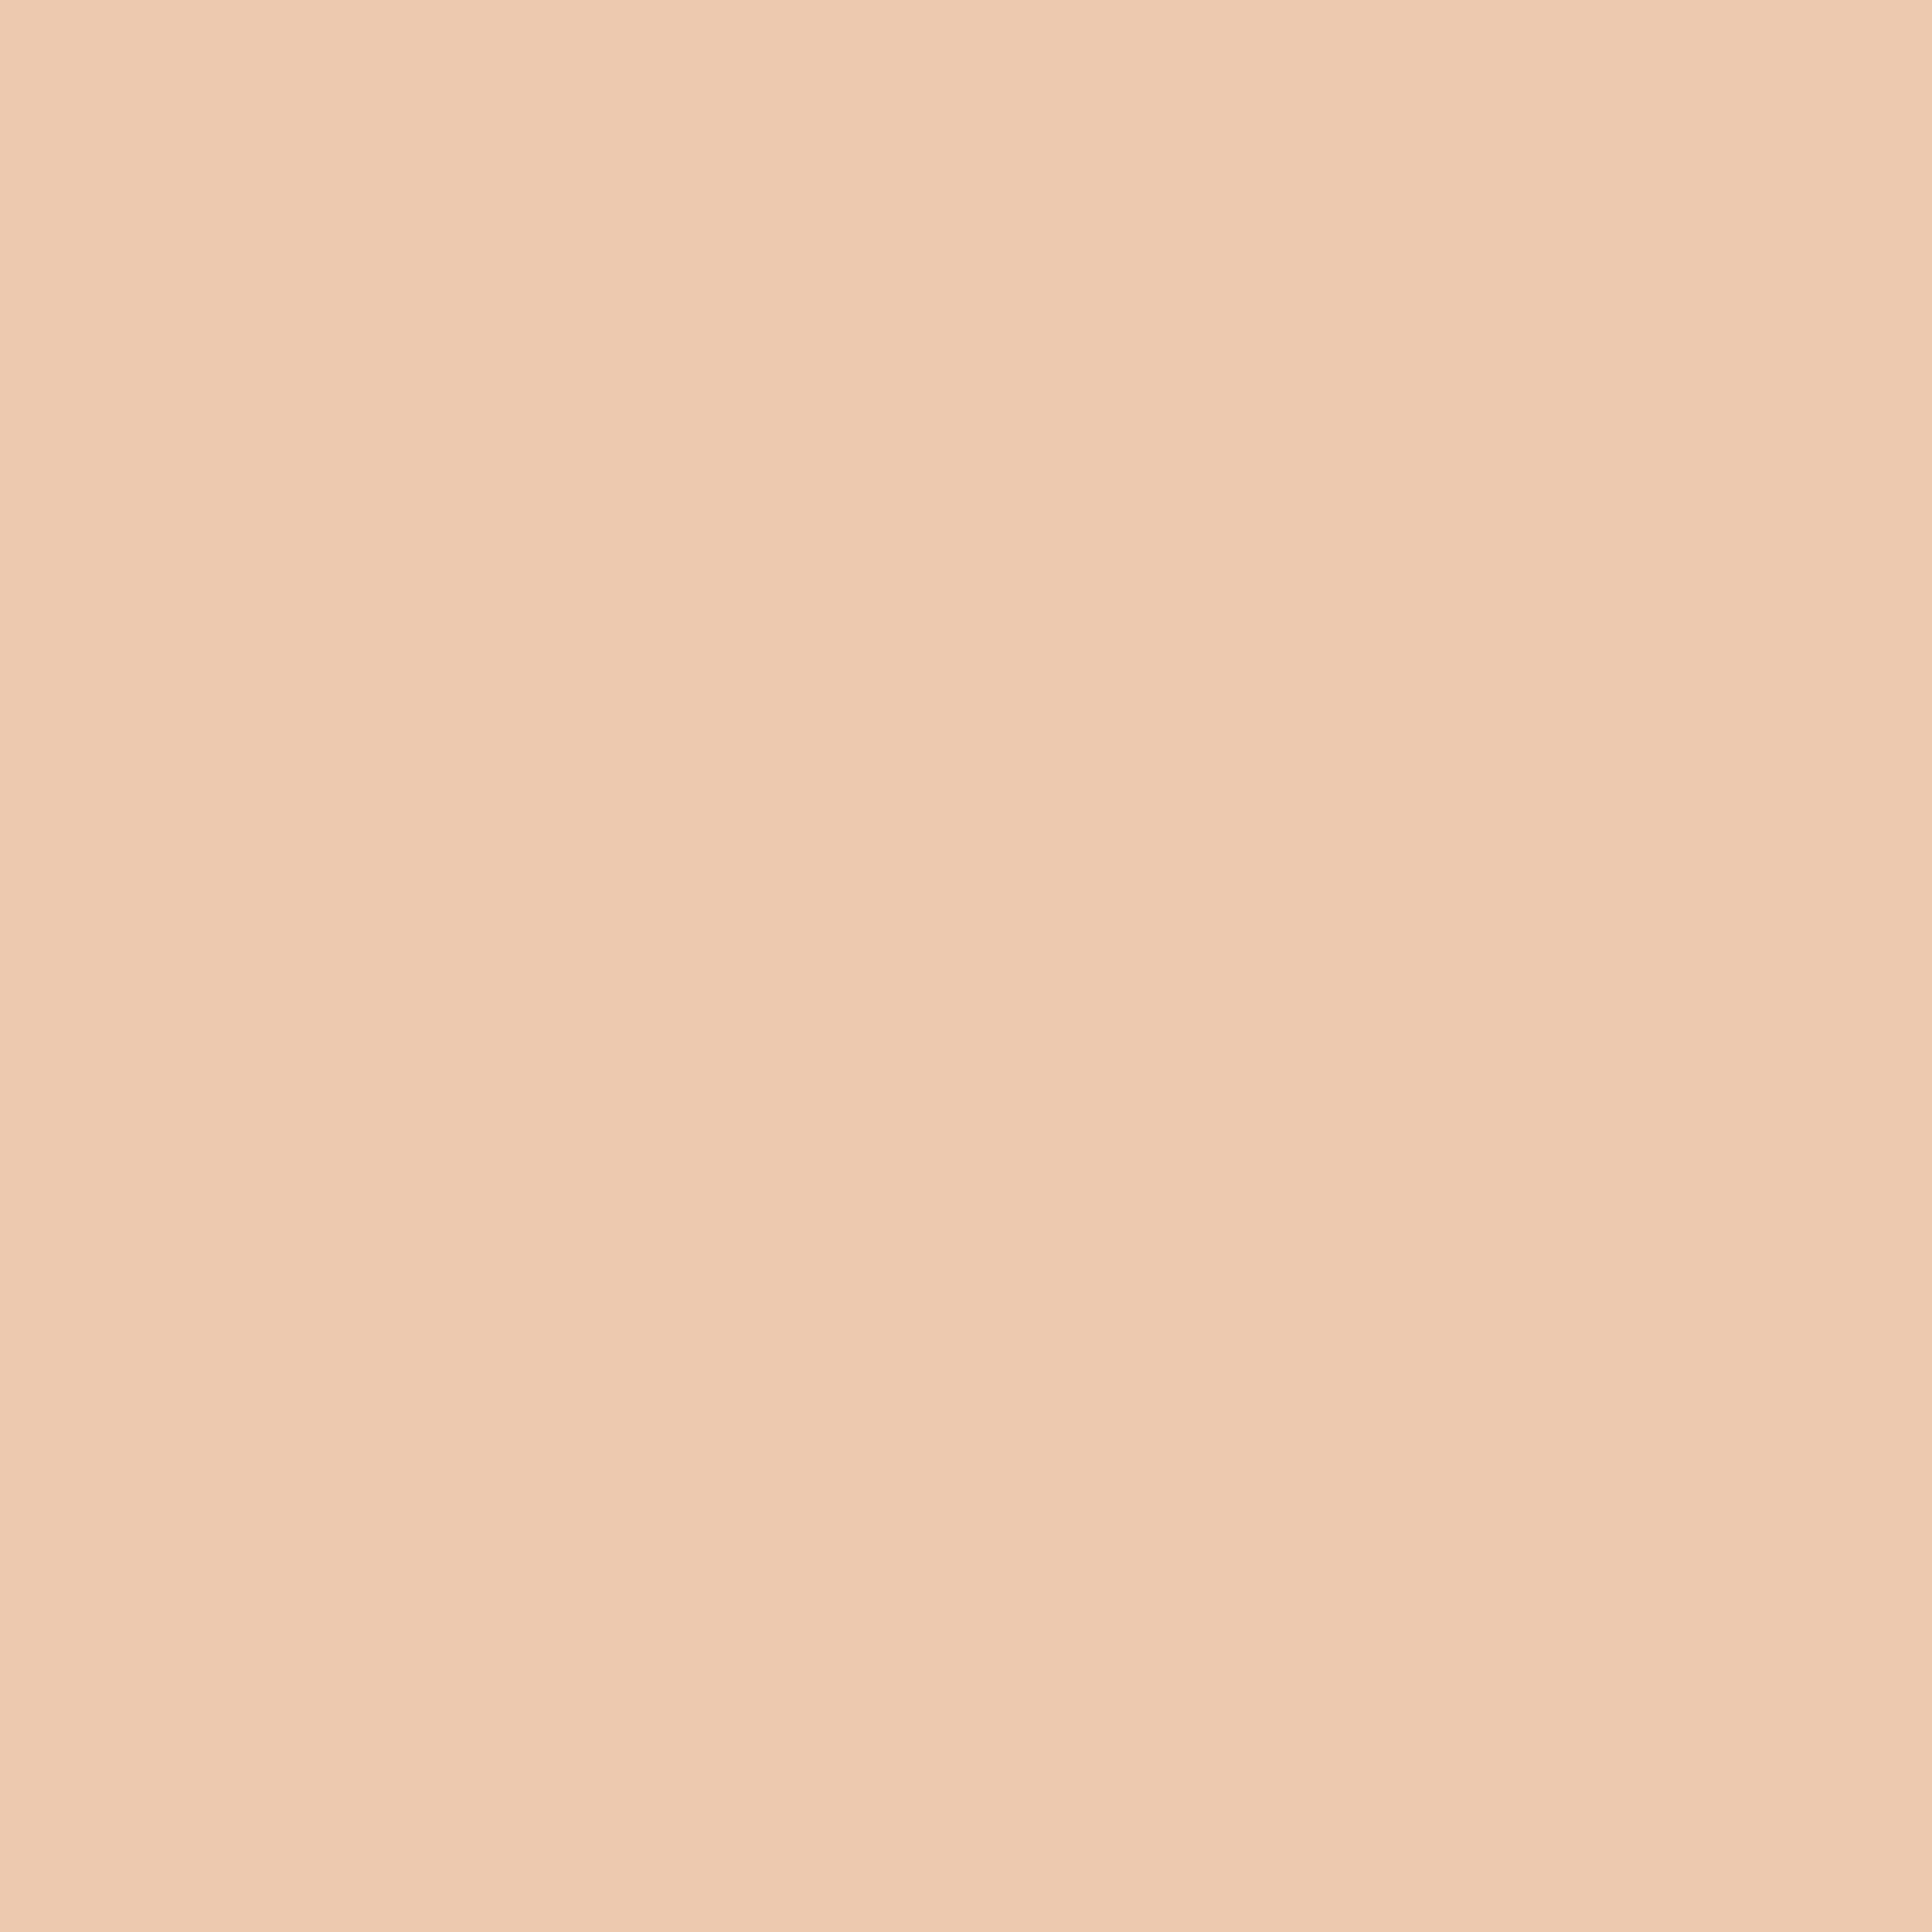 2732x2732 Desert Sand Solid Color Background